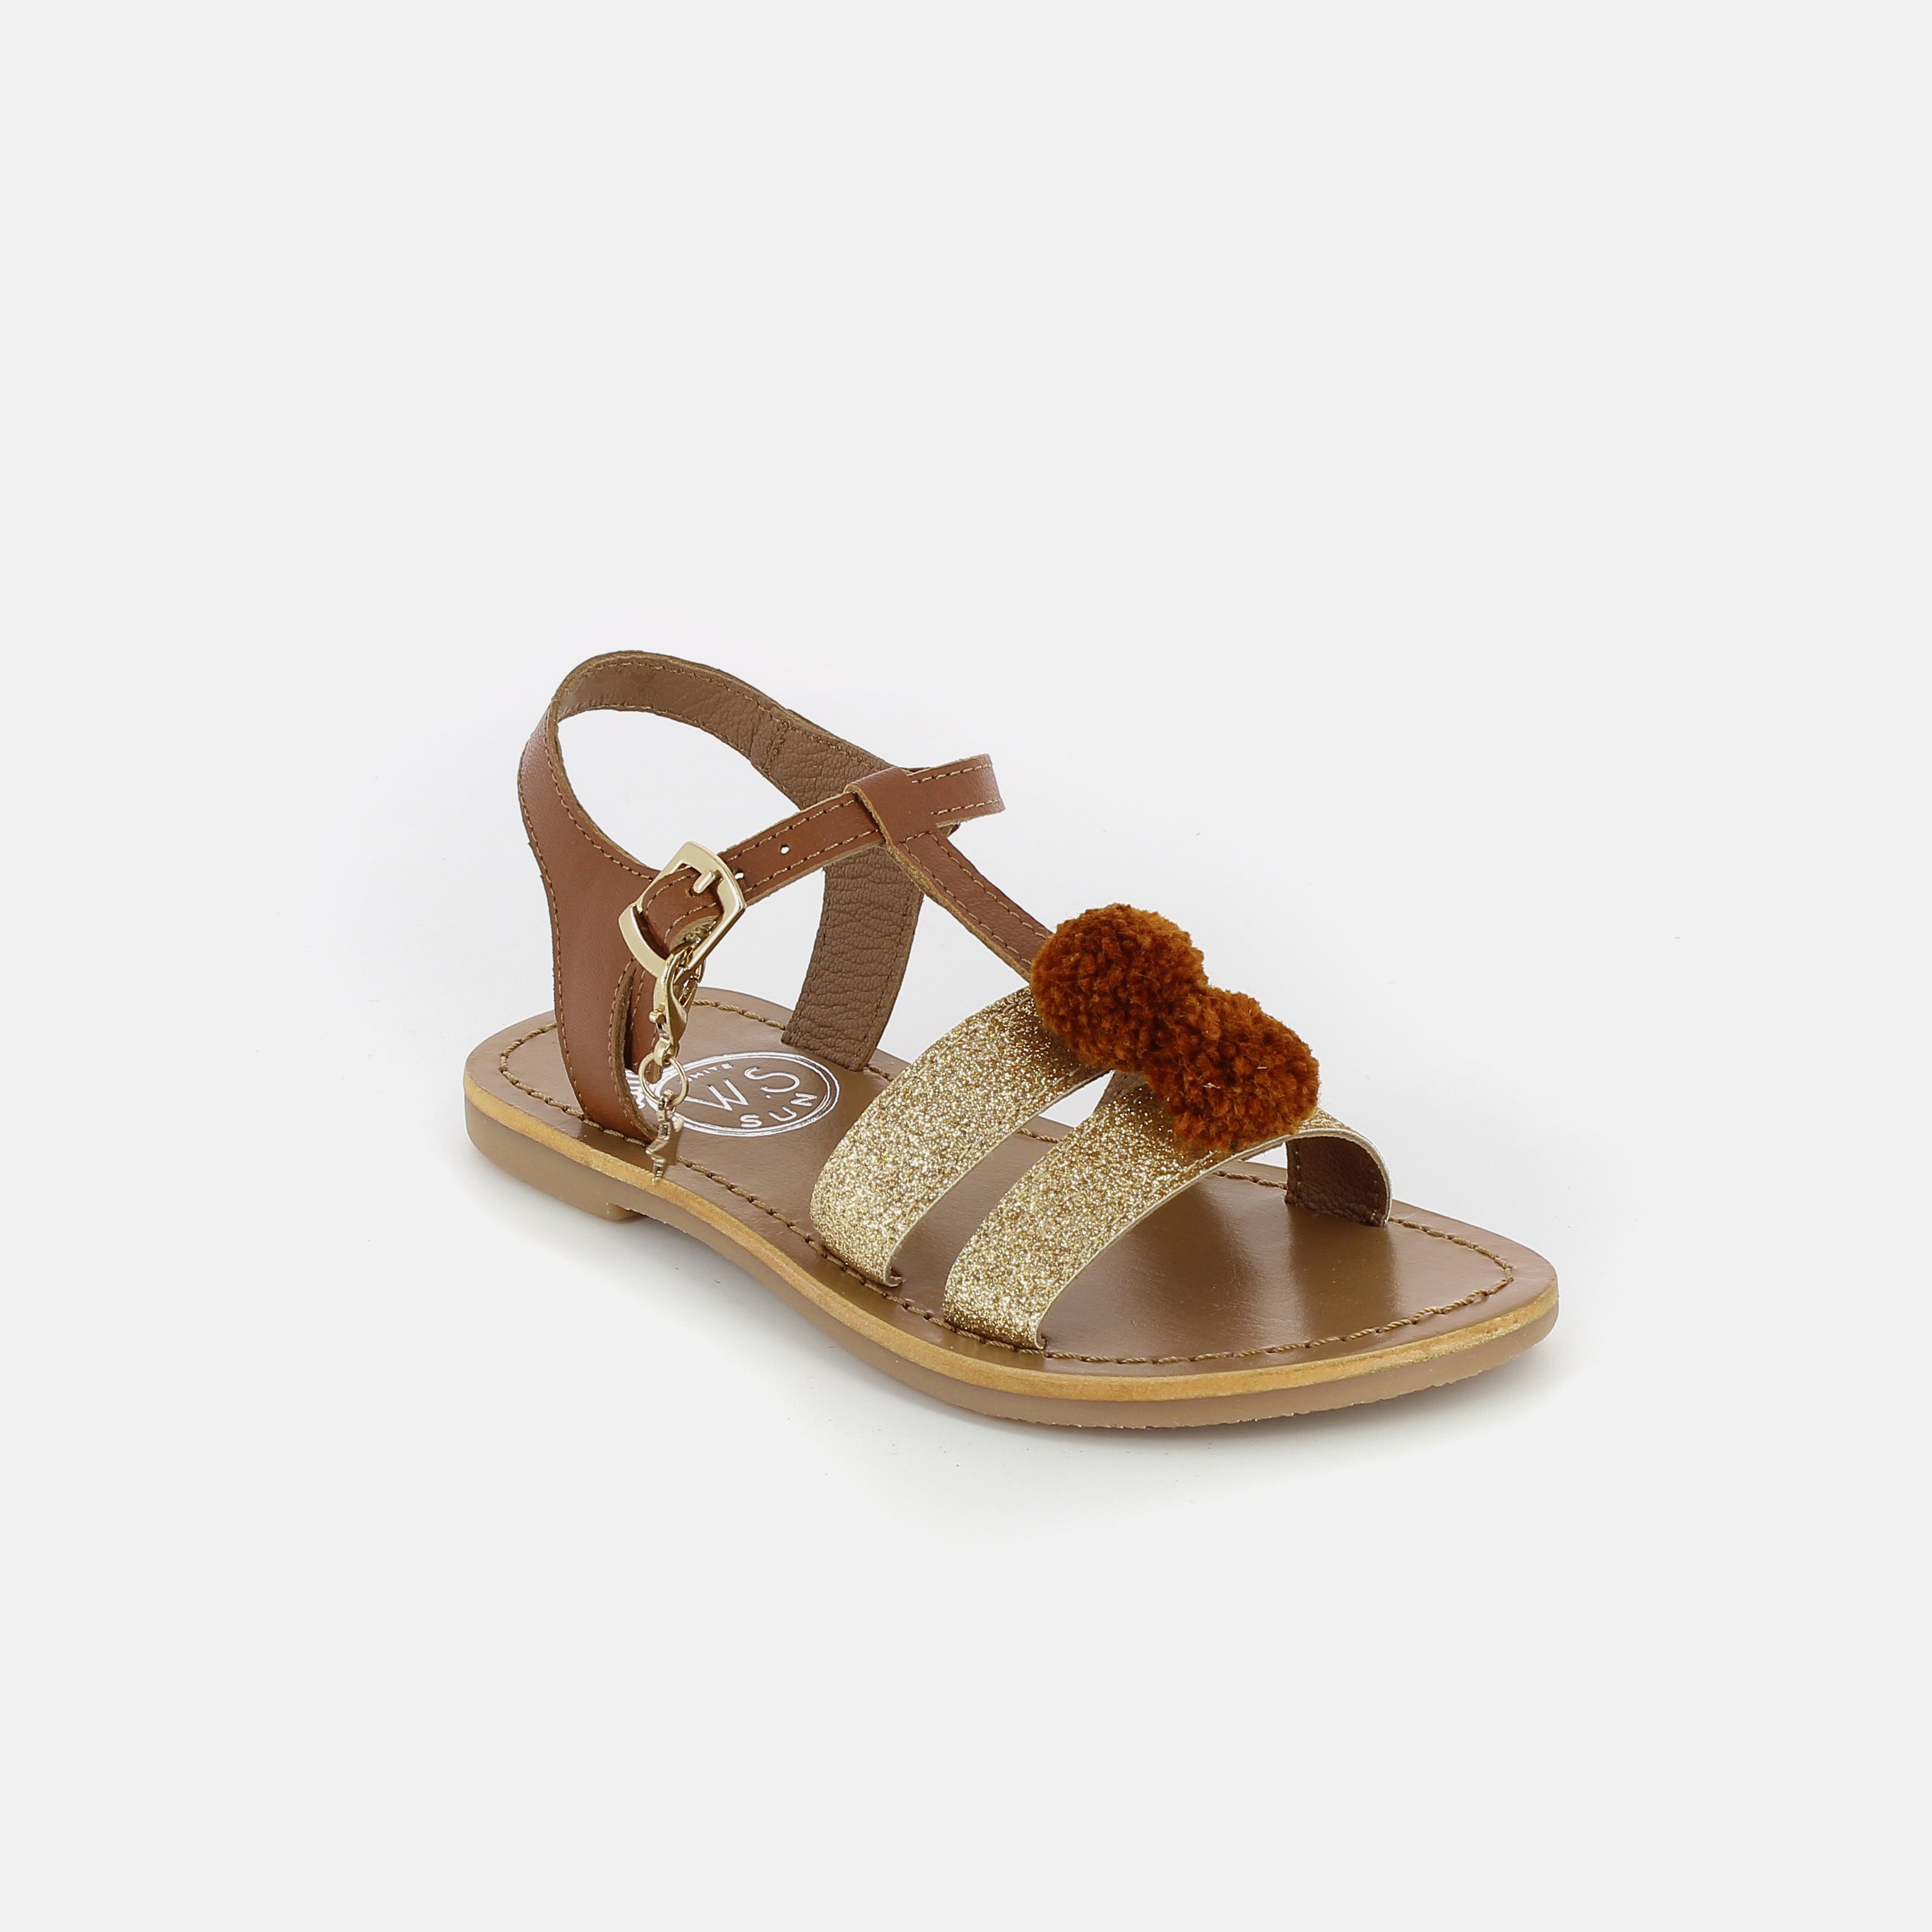 Girls Camel & Gold Leather Sandals